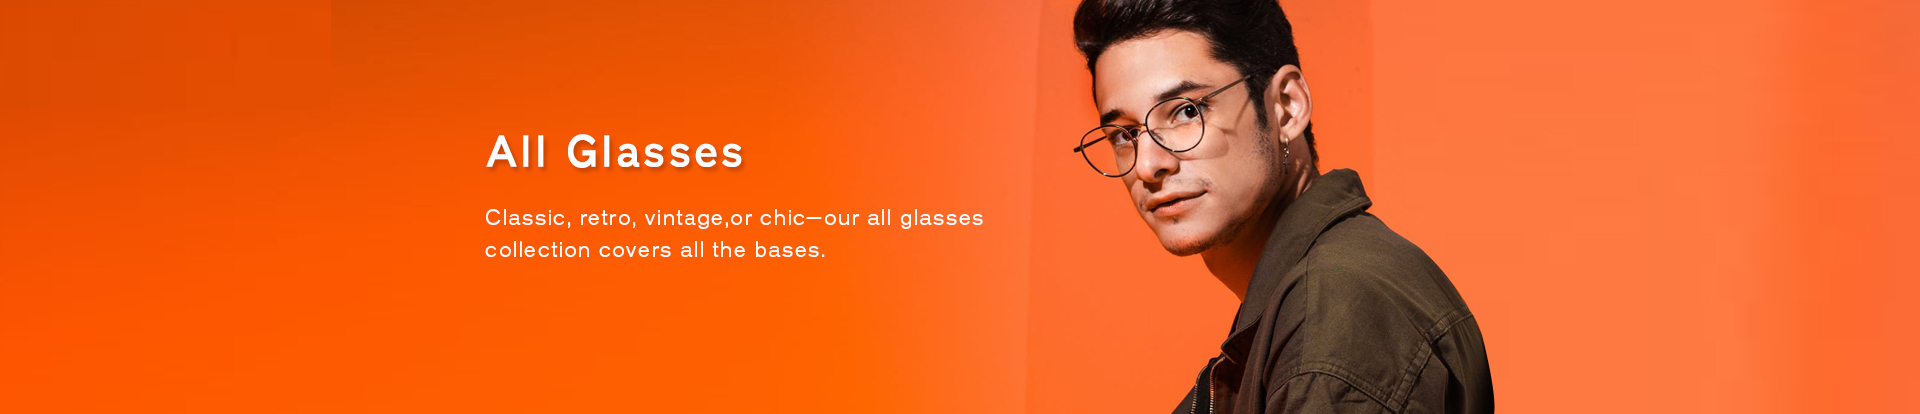 Eyeglasses - Sunglasses - Prescription Eyewear